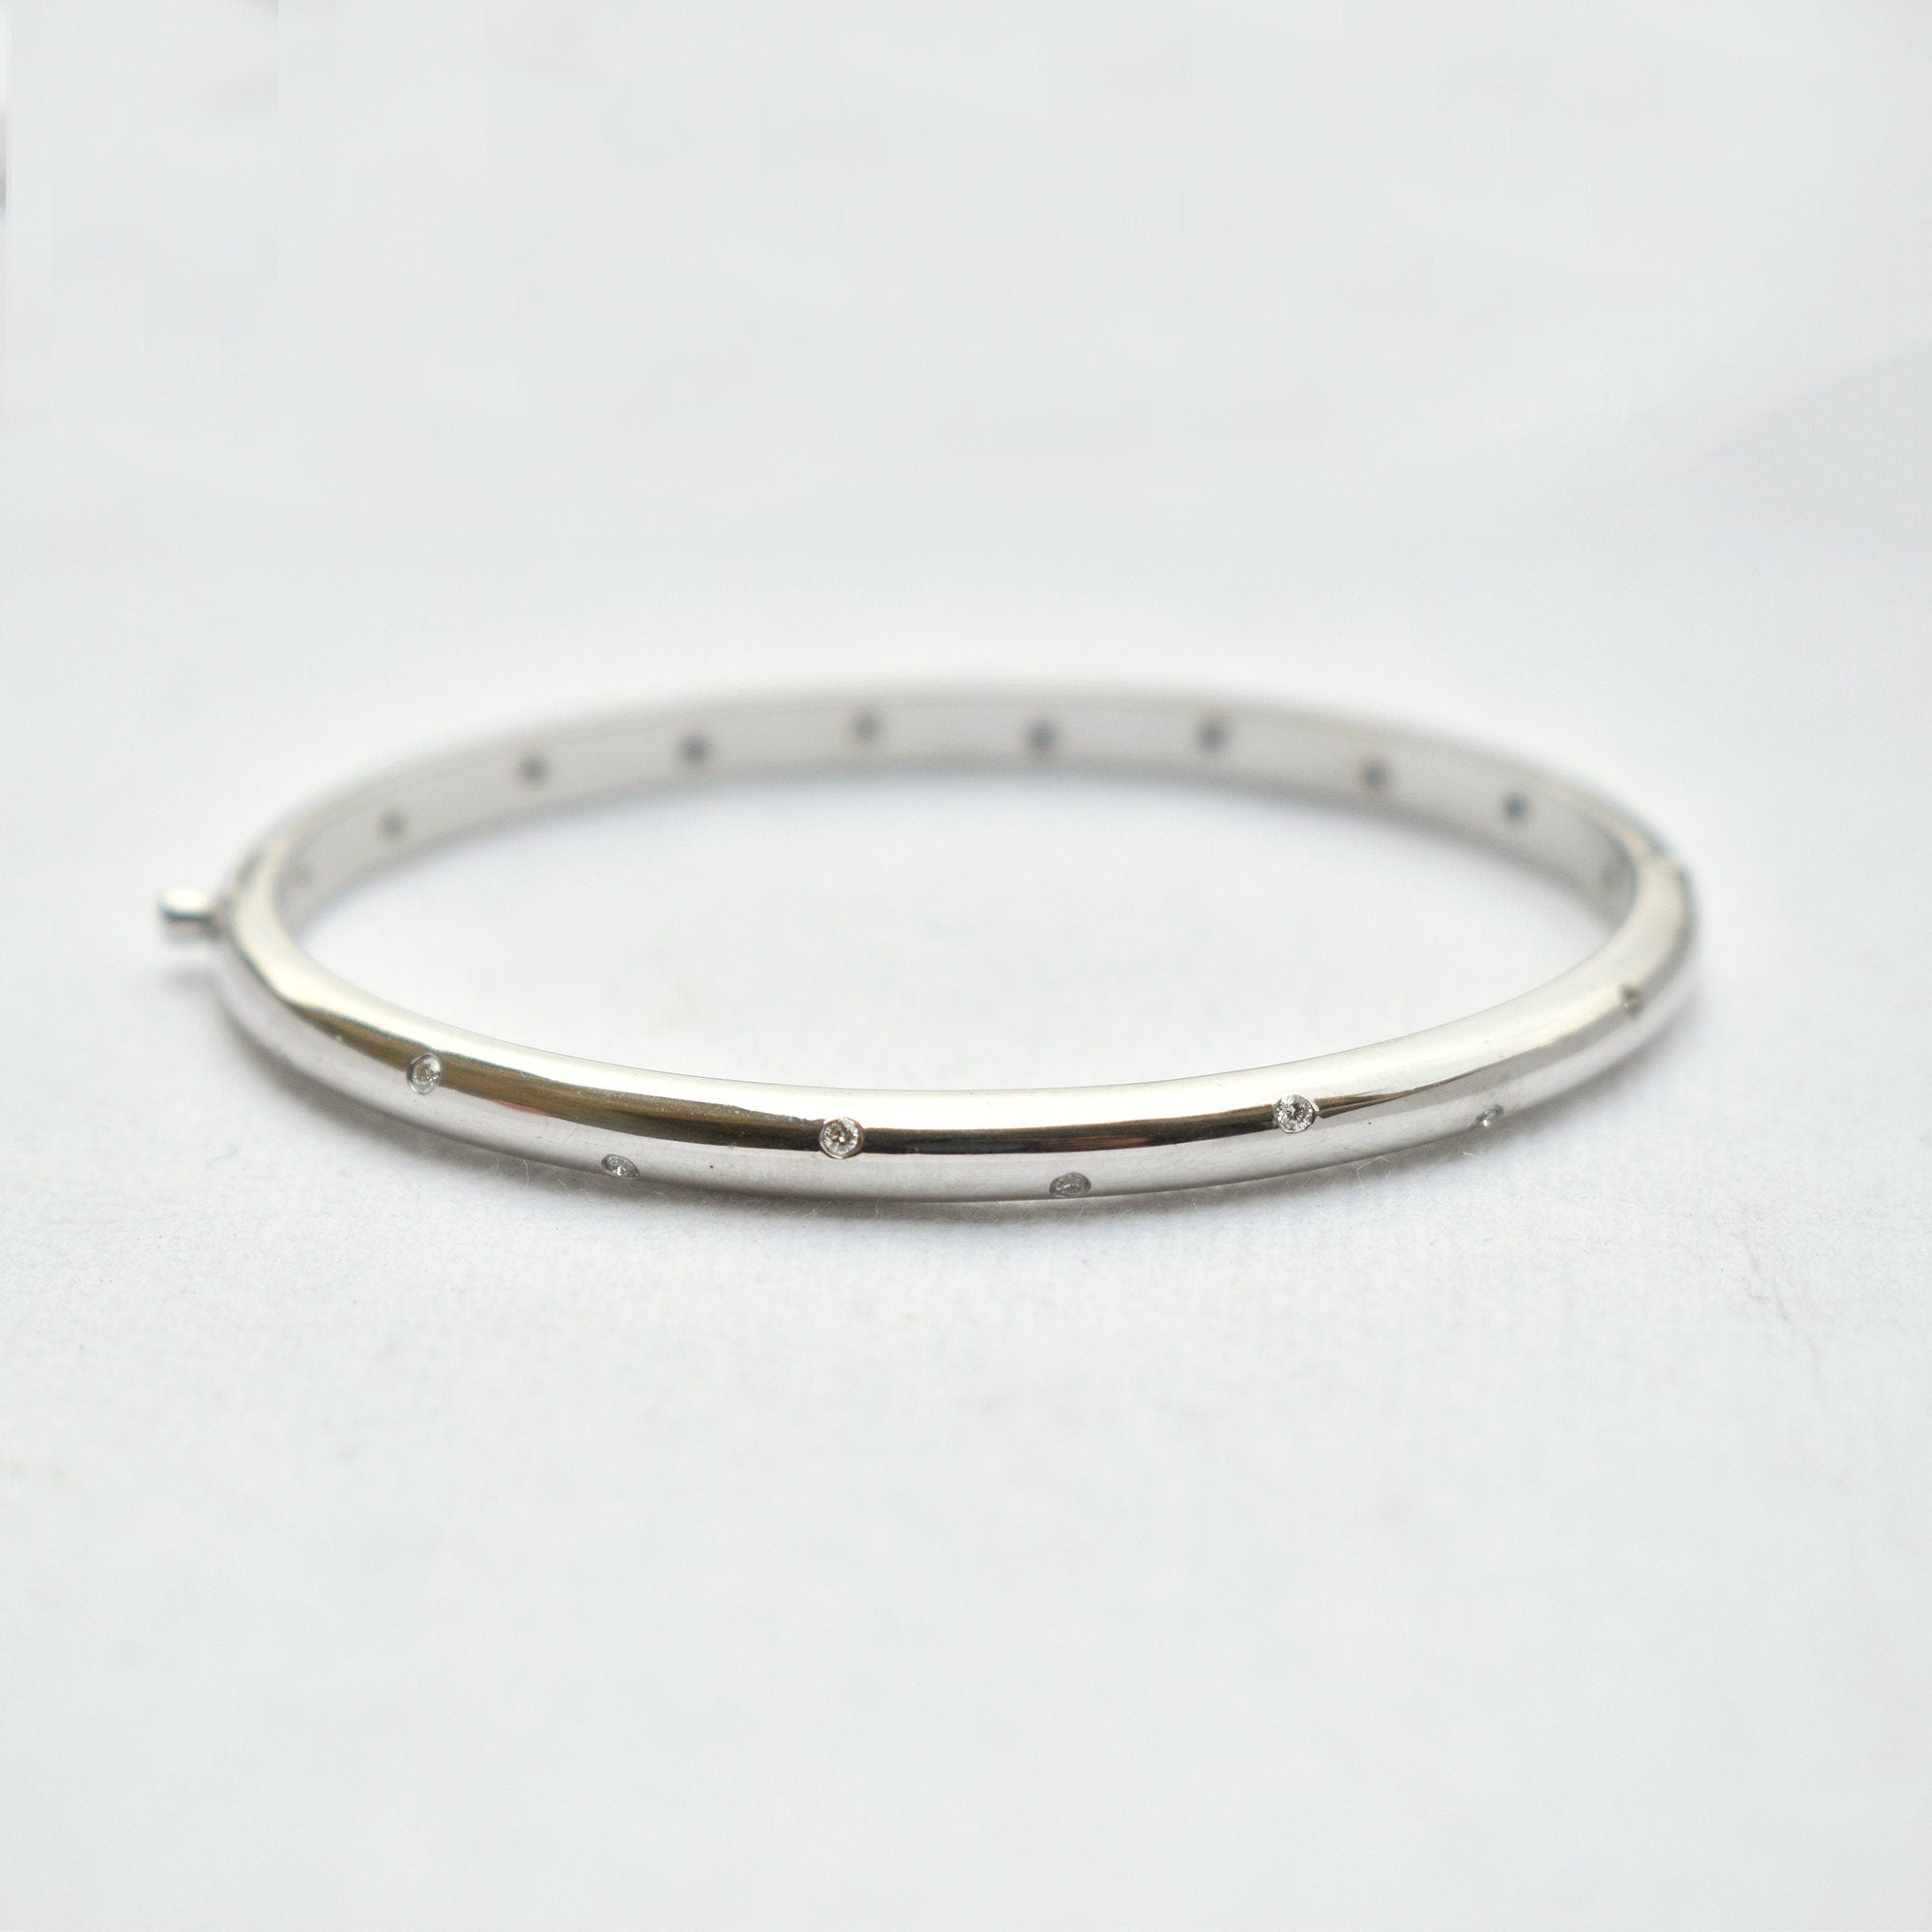 4mm Wide Etoile Diamond Oval Hinged Bangle, Solid 925 Sterling Silver Cuff Bracelet, Flush Set Diamond Openable Bracelet, Wedding Jewelry